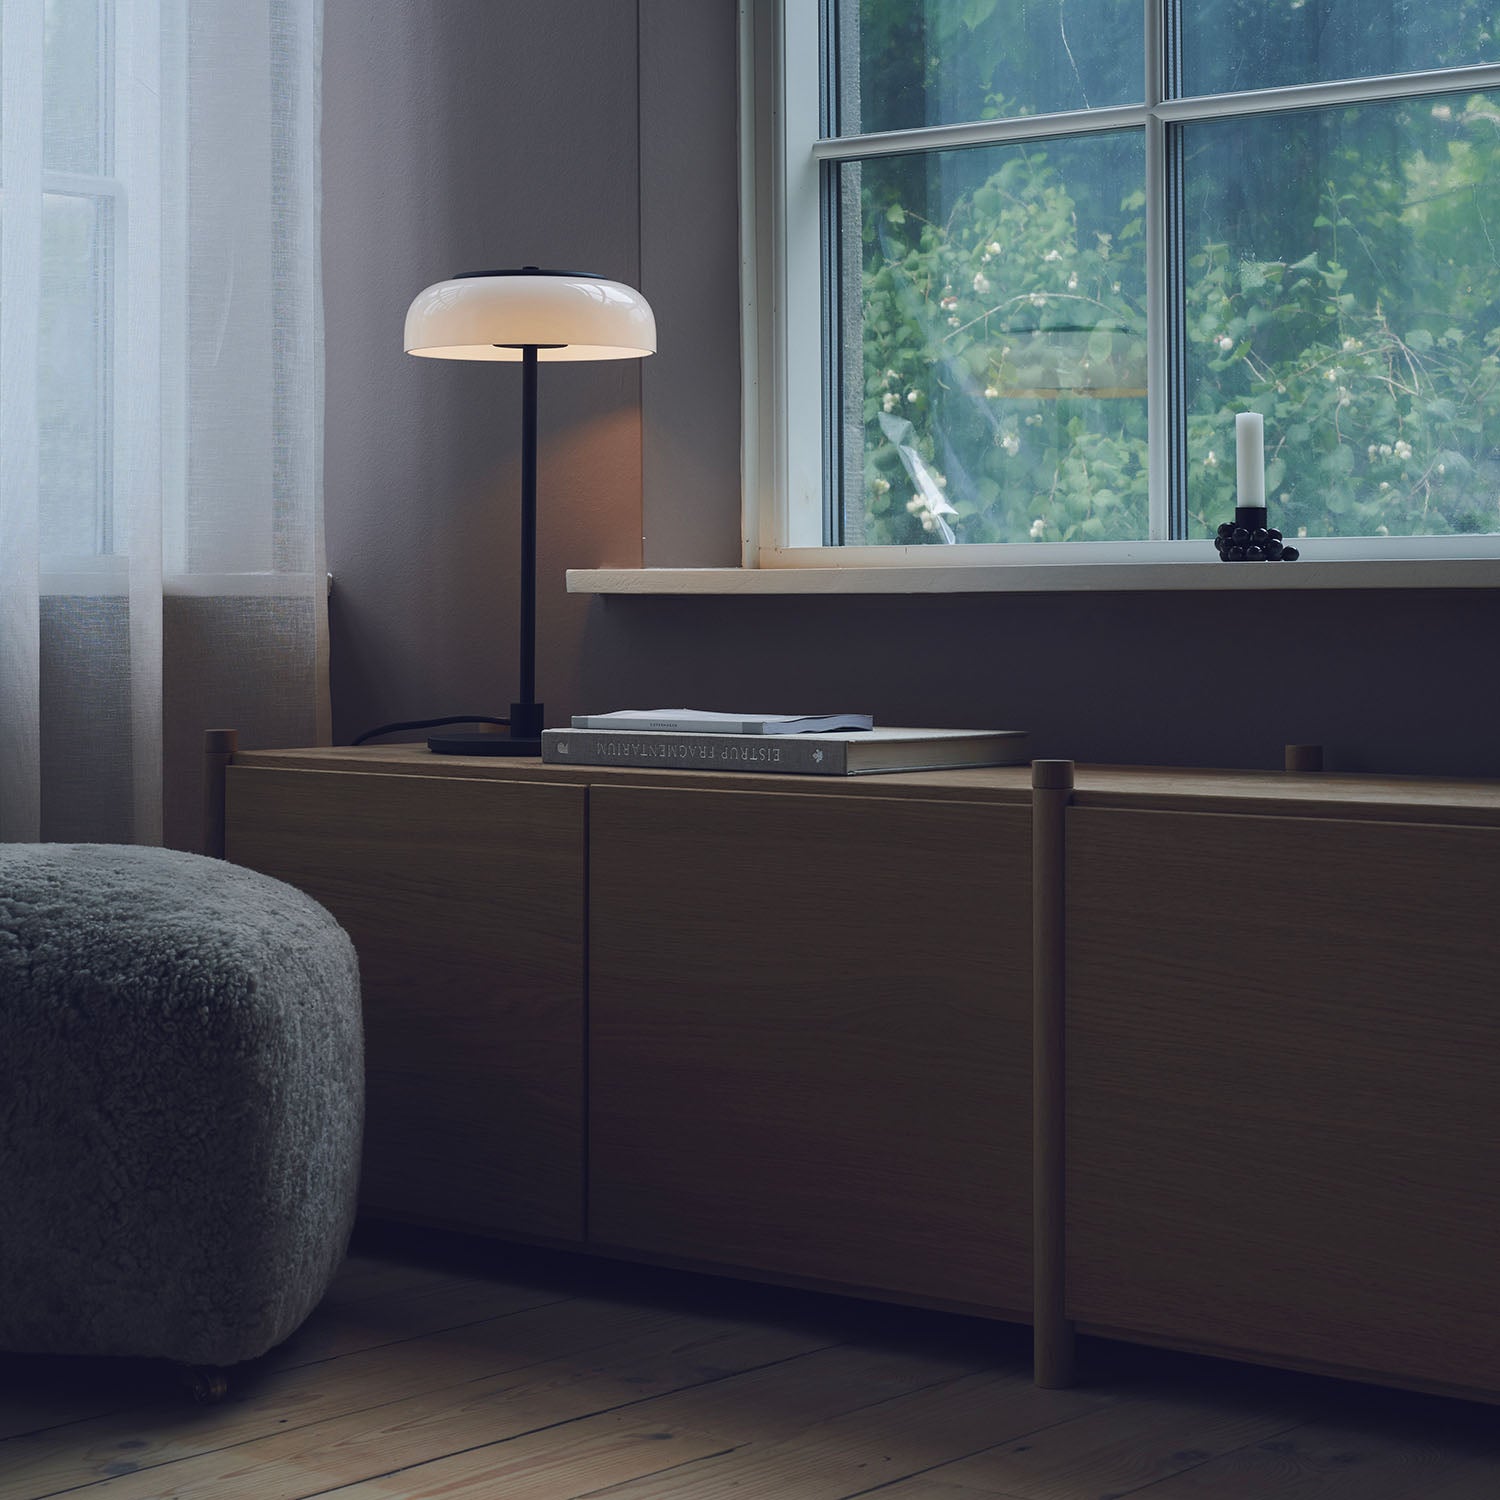 BLOSSI - Luxurious desk lamp in elegant and designer glass